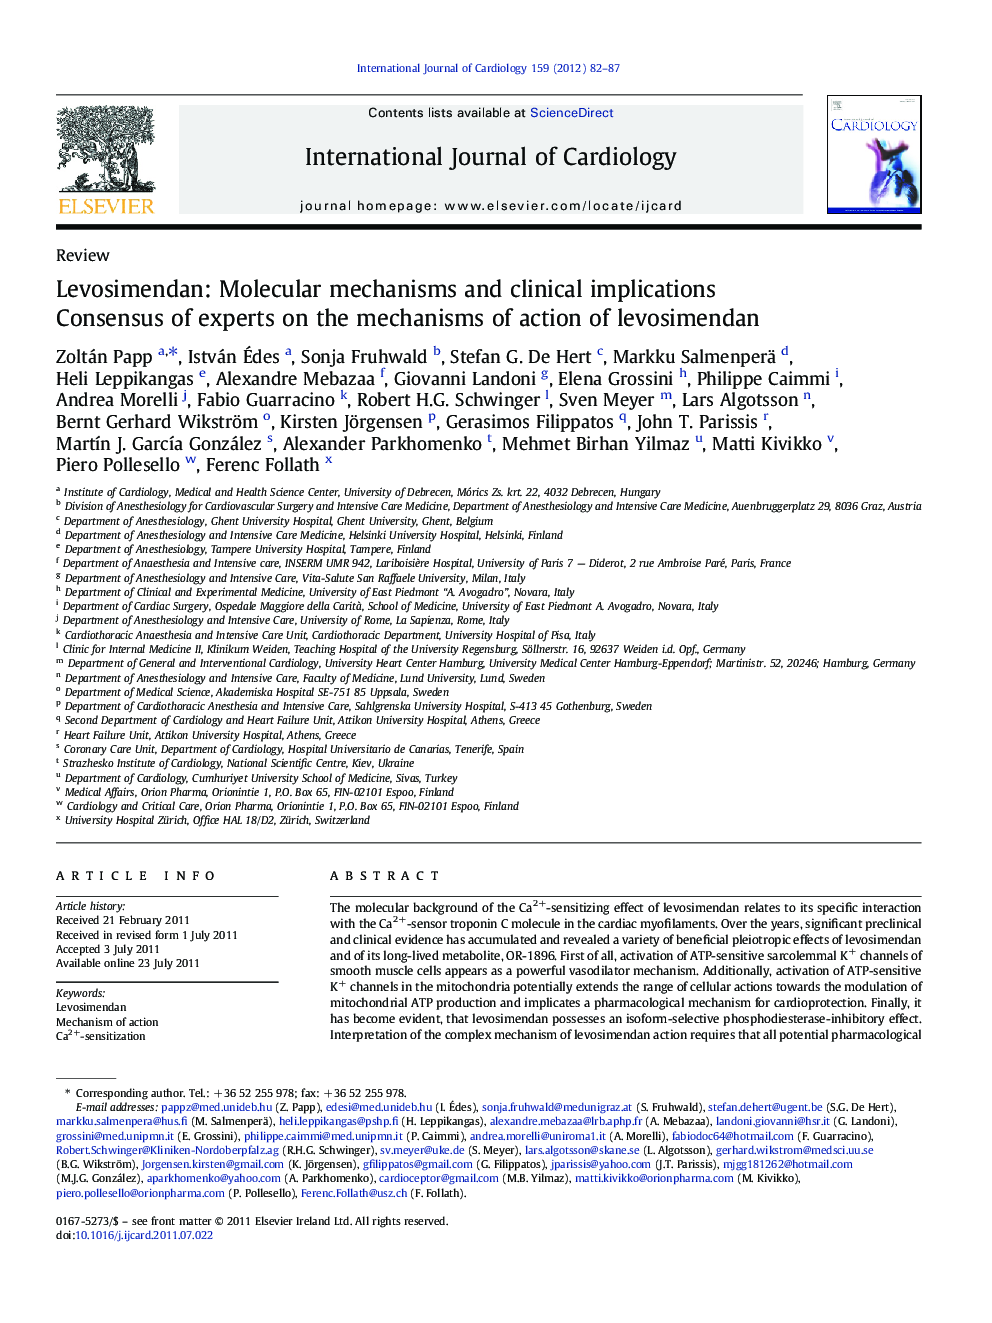 Levosimendan: Molecular mechanisms and clinical implications: Consensus of experts on the mechanisms of action of levosimendan